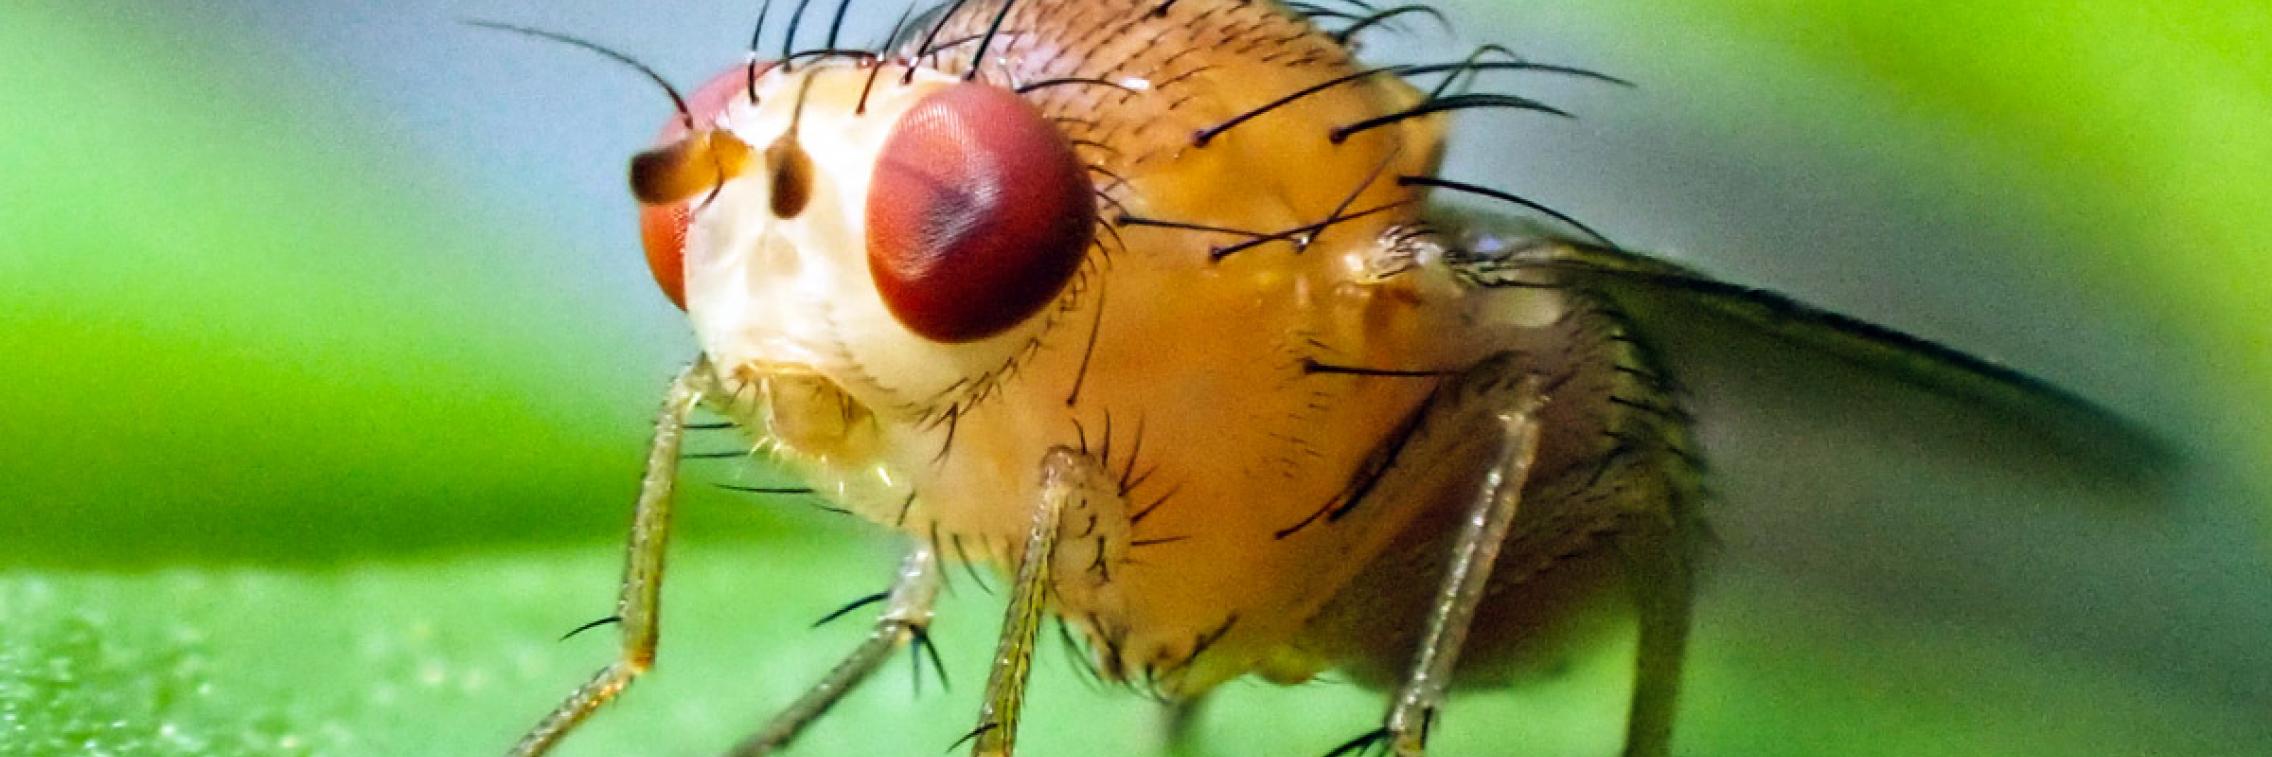 Fly insect investigators - Erinn Fagan-Jeffries